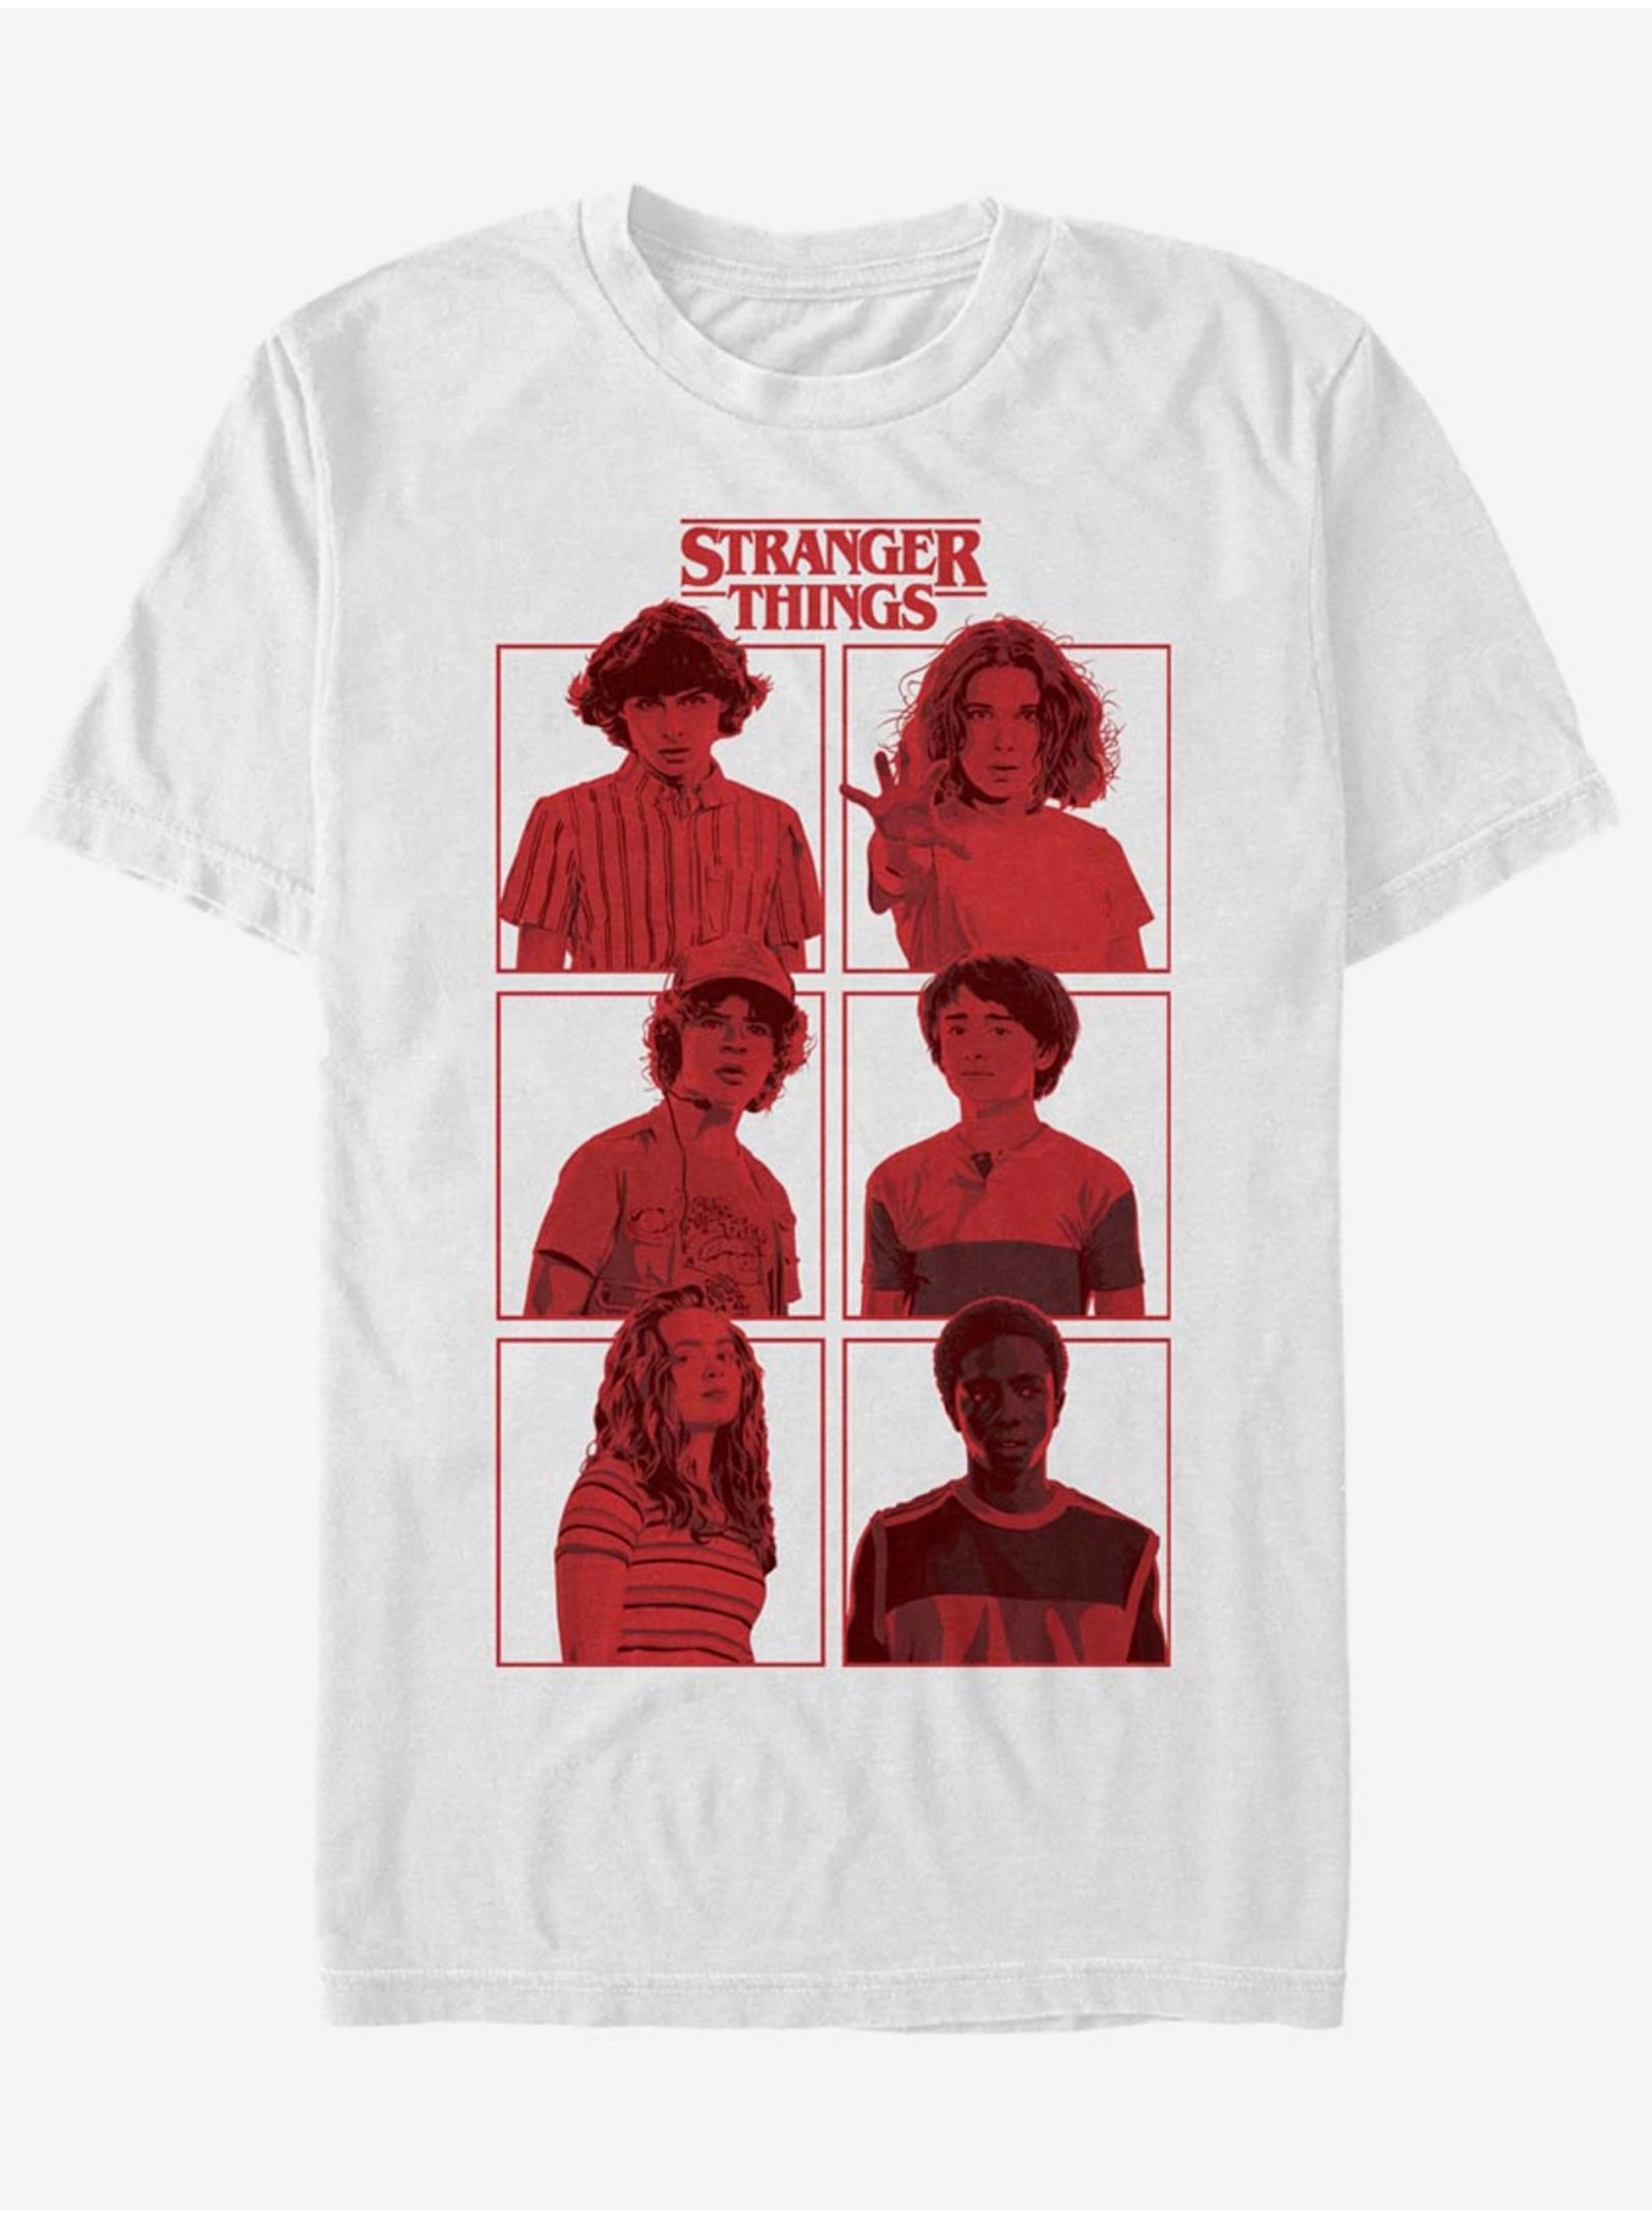 Lacno Postavy Stranger Things ZOOT. FAN Netflix - unisex tričko